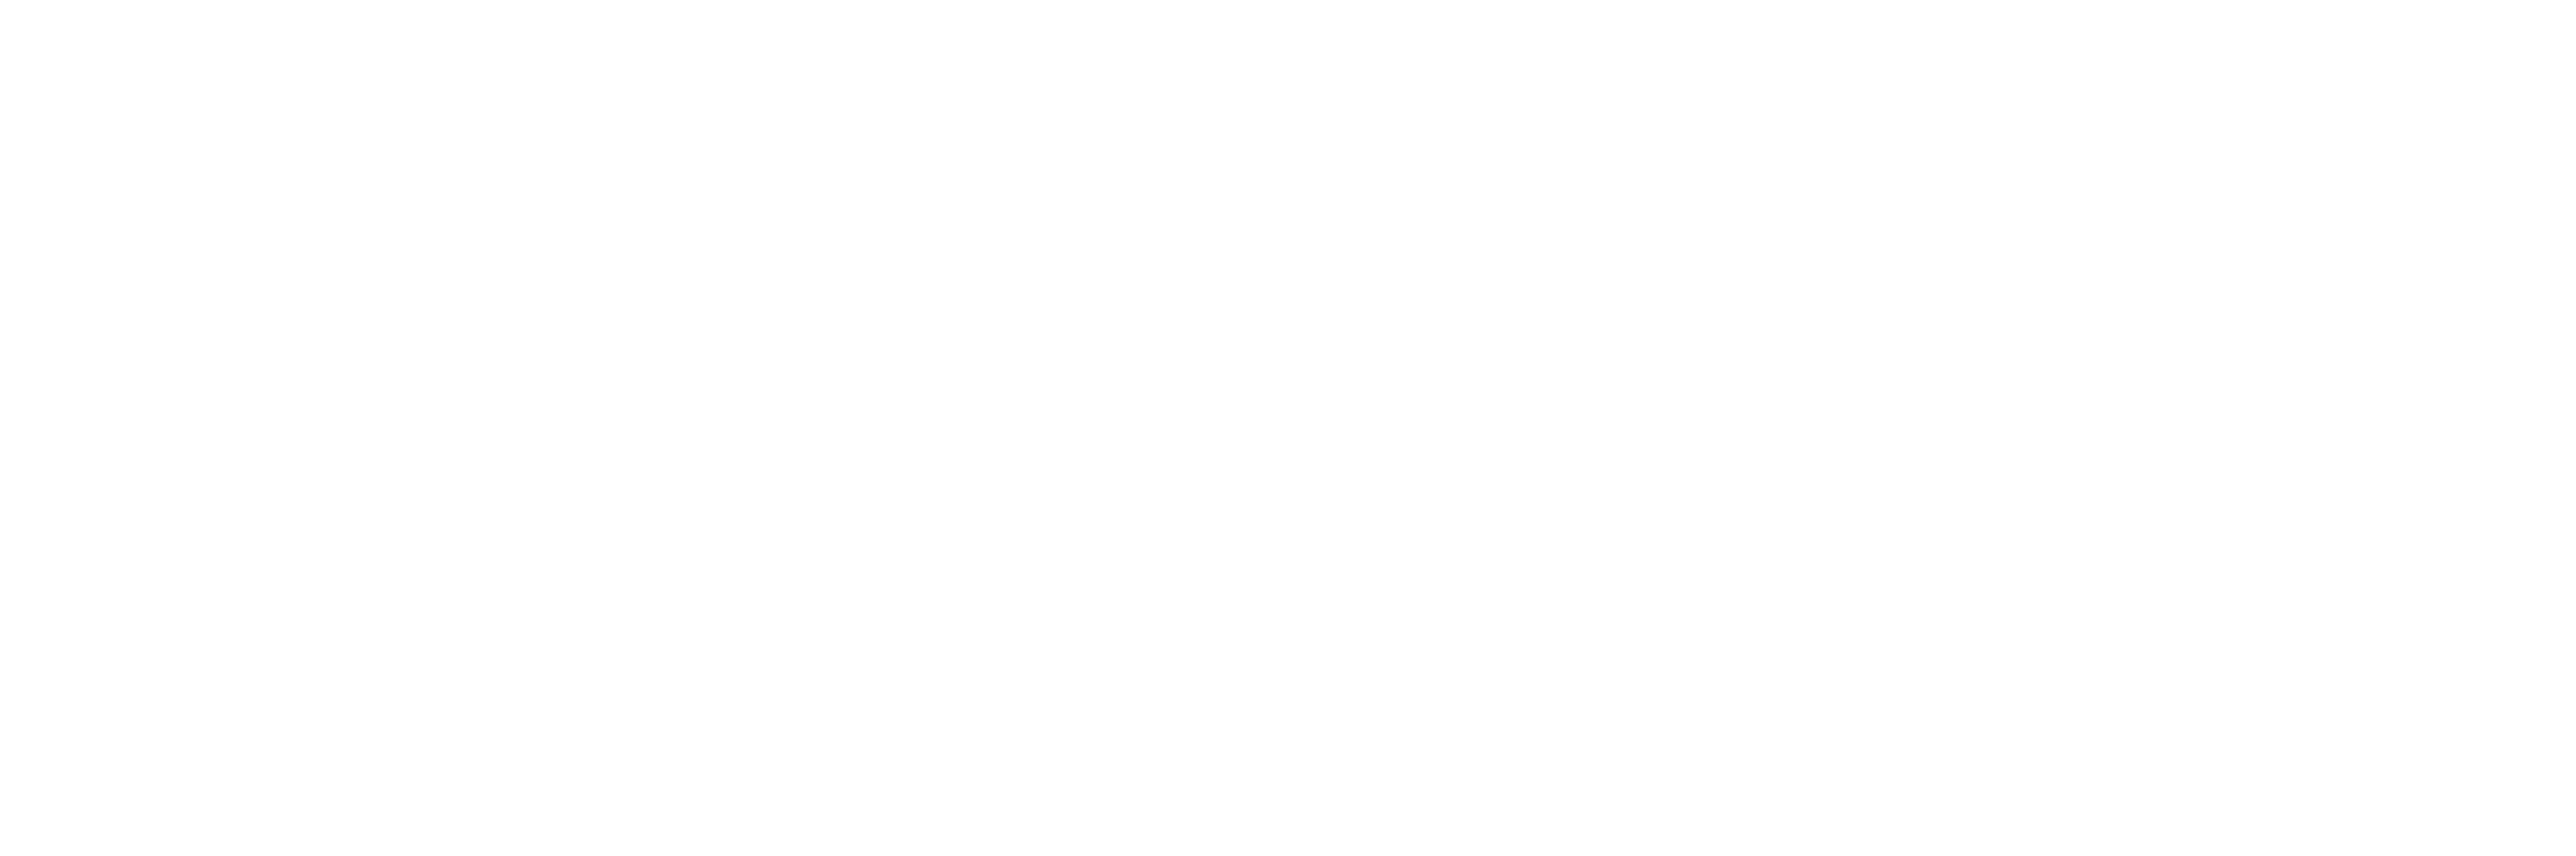 Washington Service Corps logo